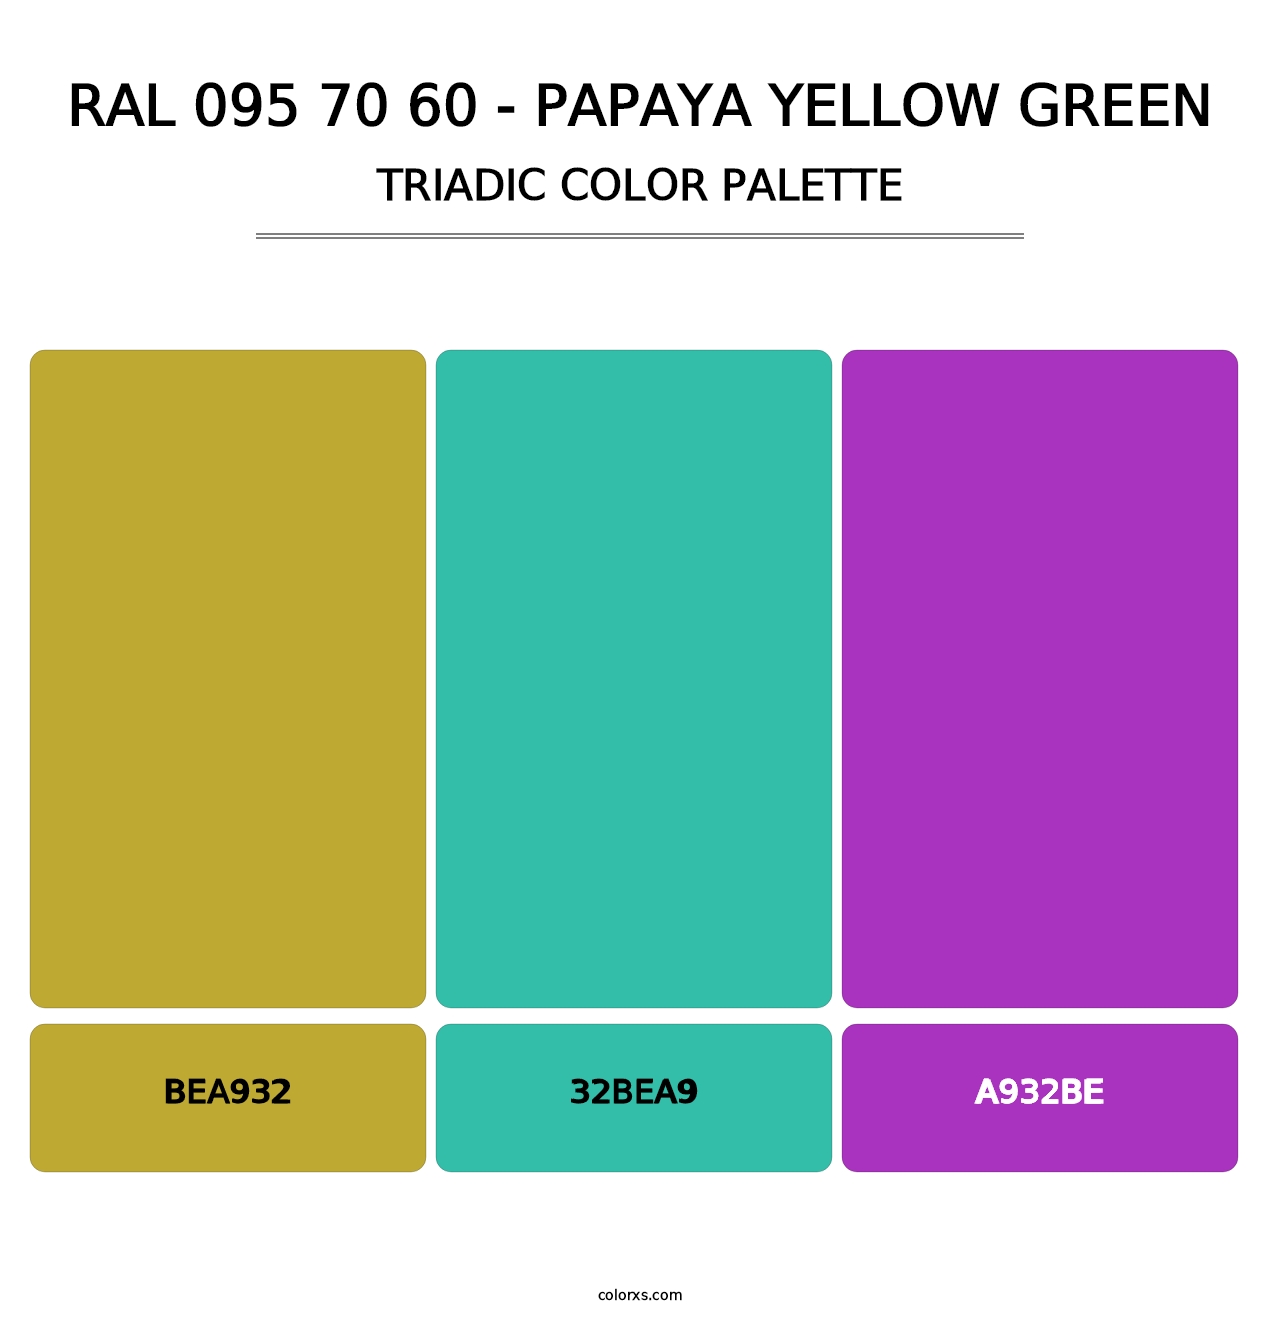 RAL 095 70 60 - Papaya Yellow Green - Triadic Color Palette